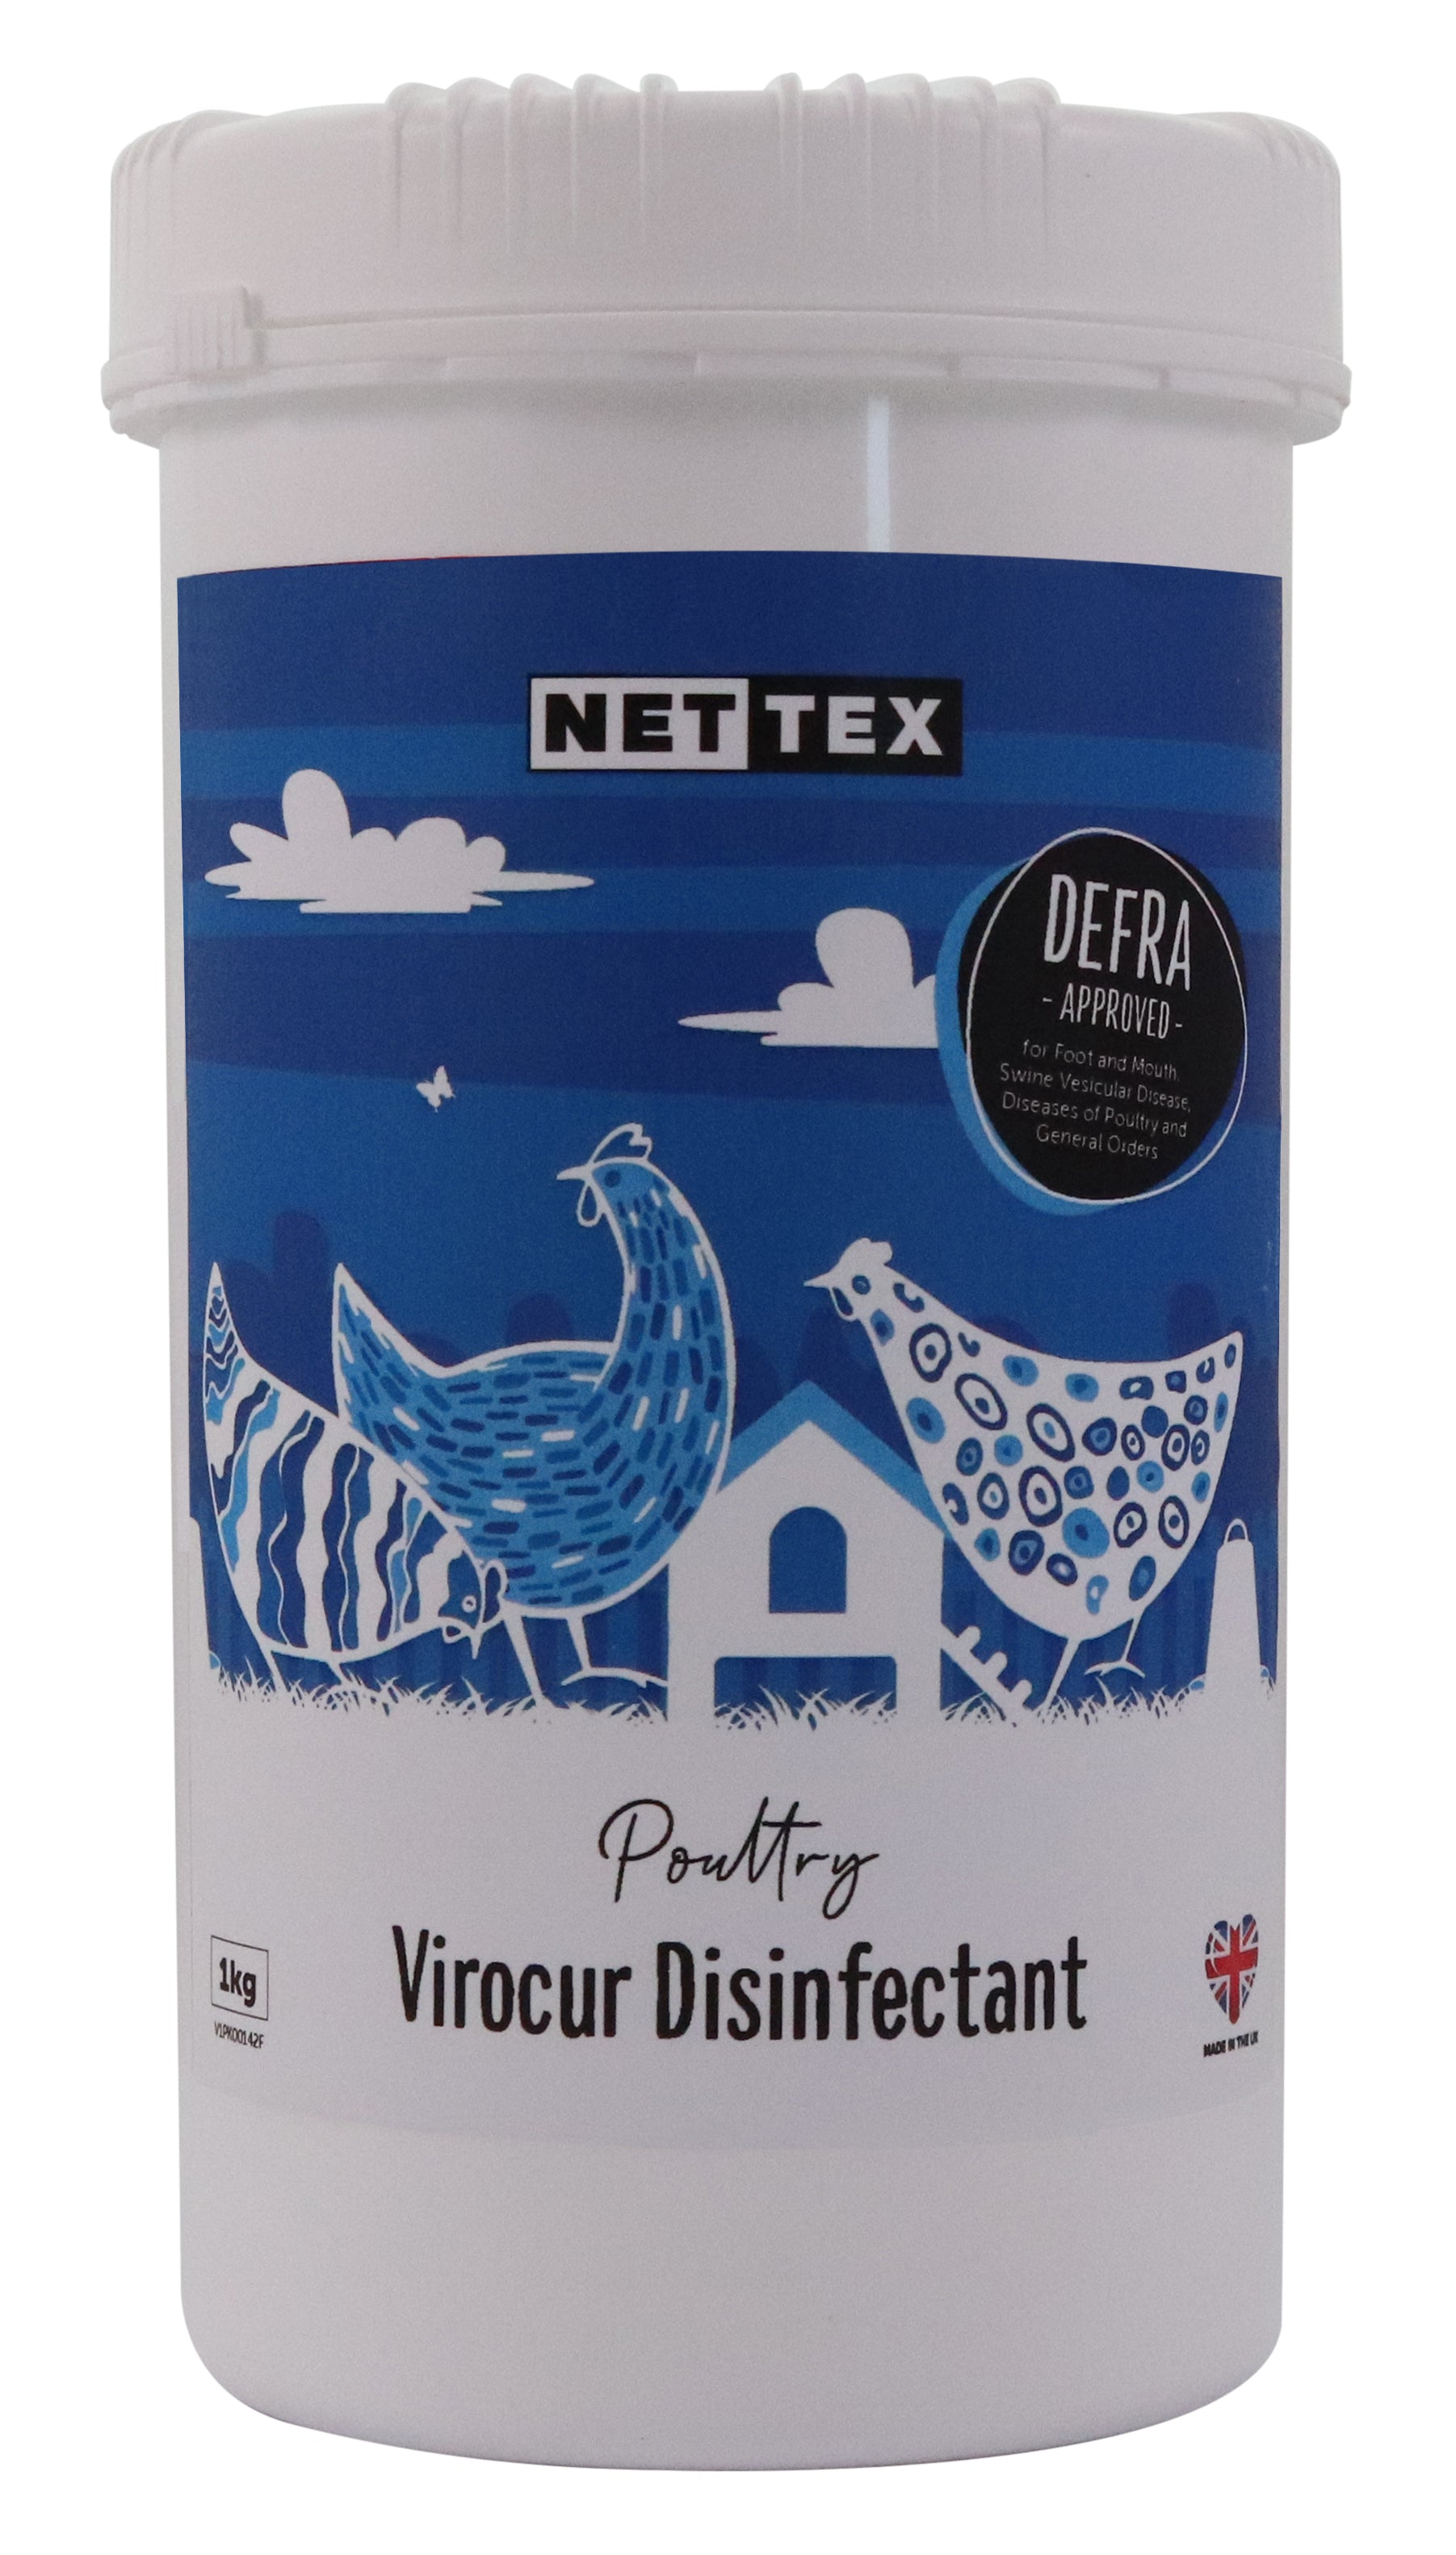 Nettex Poultry Virocur Disinfectant